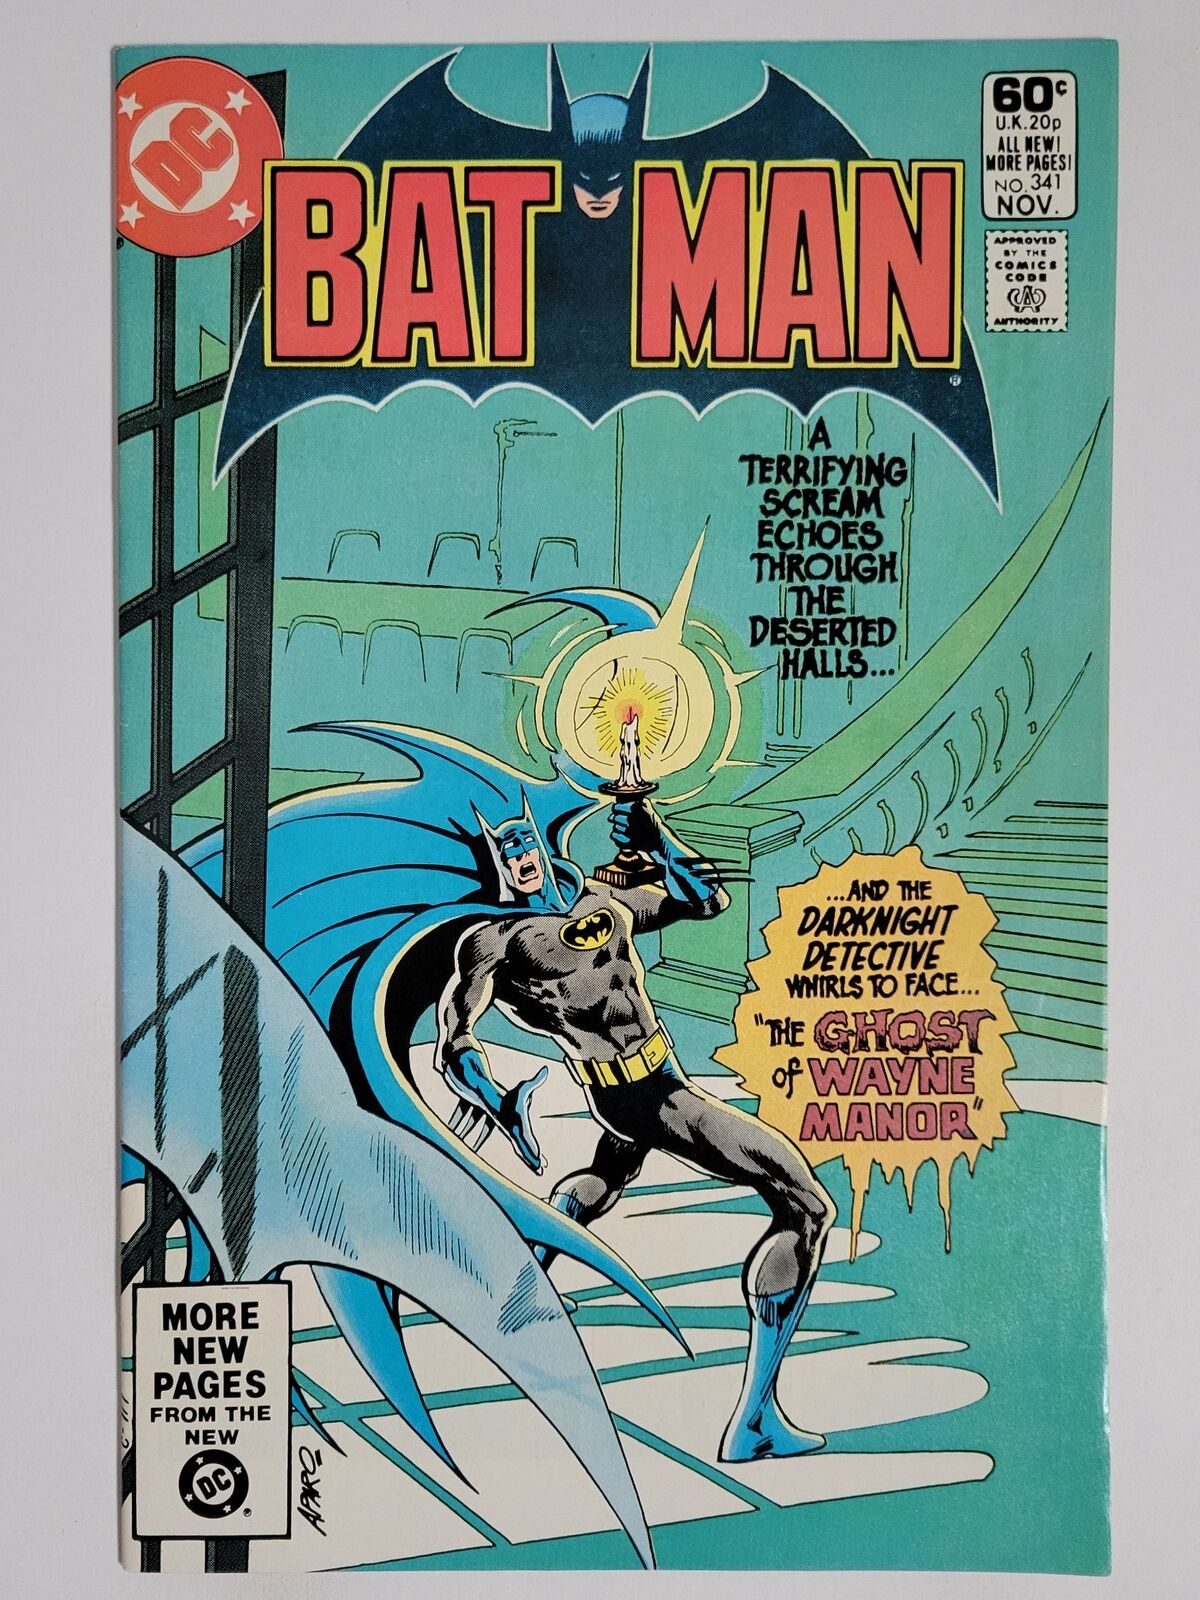 BATMAN #341 (VF-) 1981 "THE GHOST of WAYNE MANOR!" MAN-BAT APPEARANCE! BRONZE